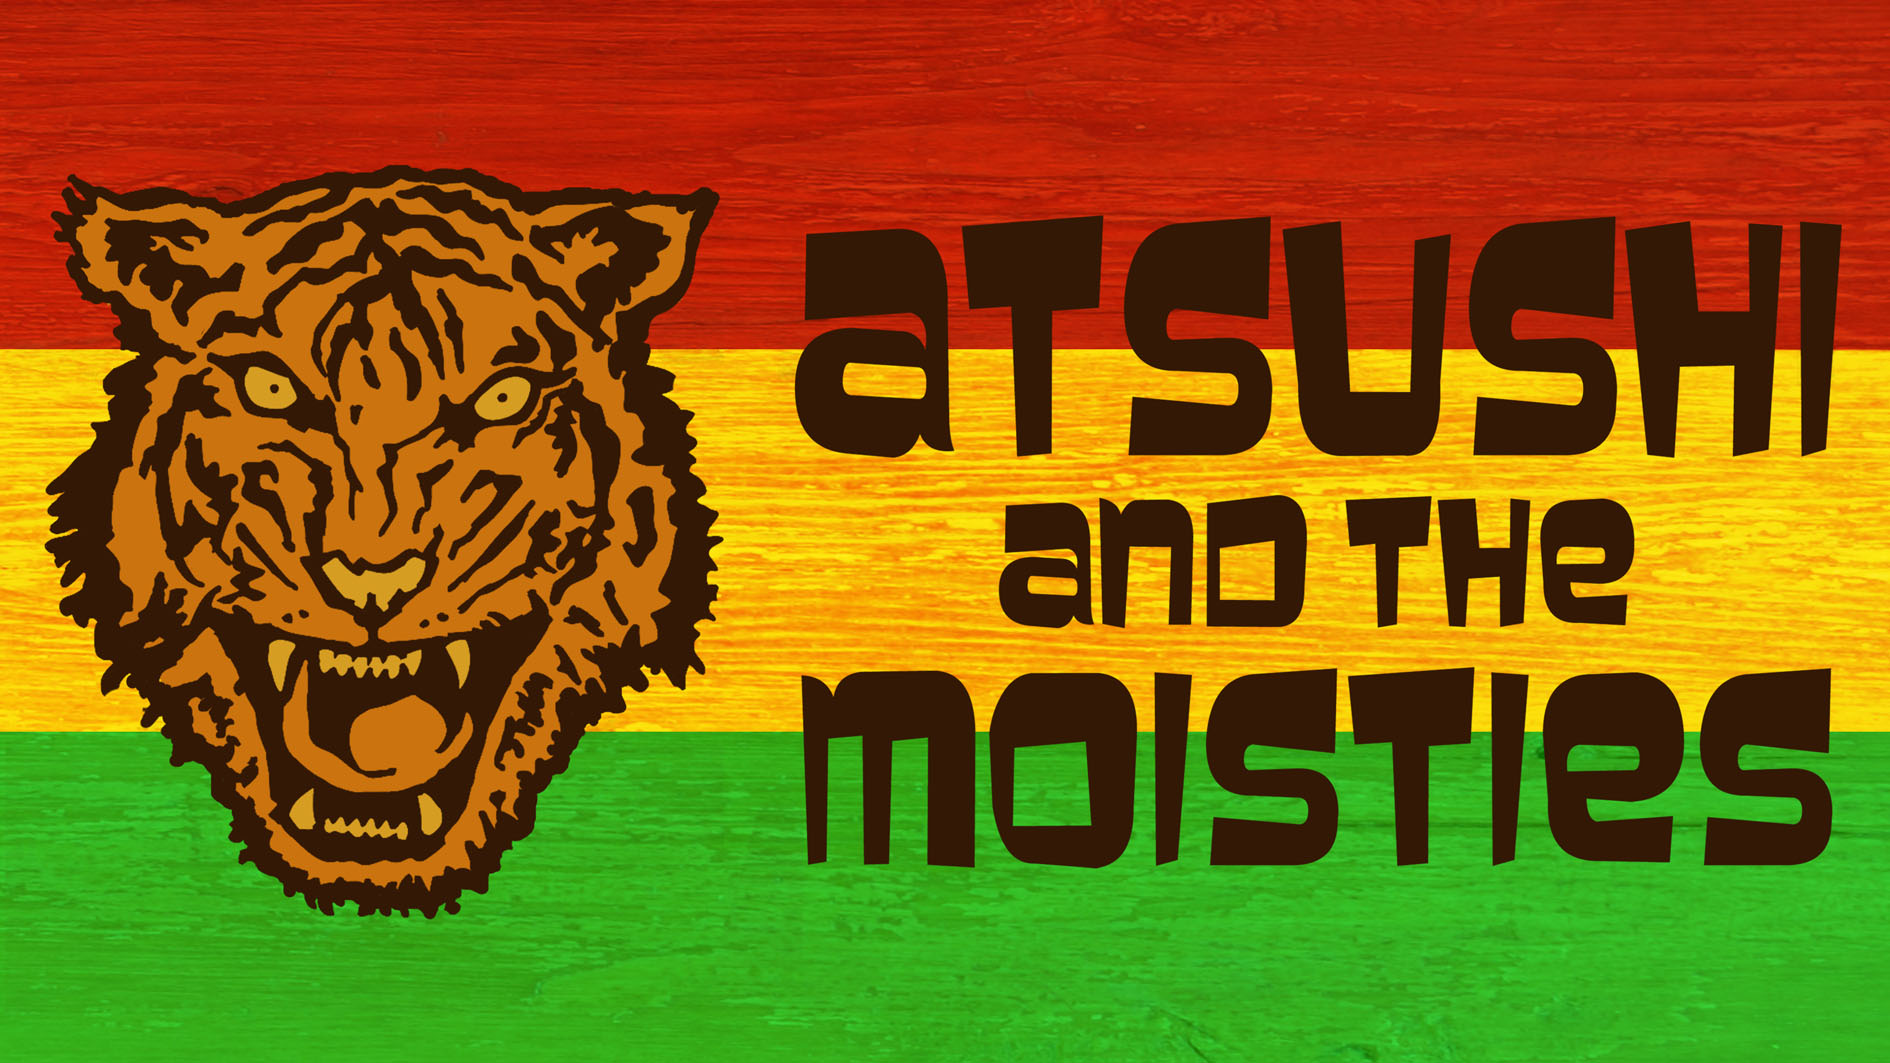 Atsushi And The Moisties